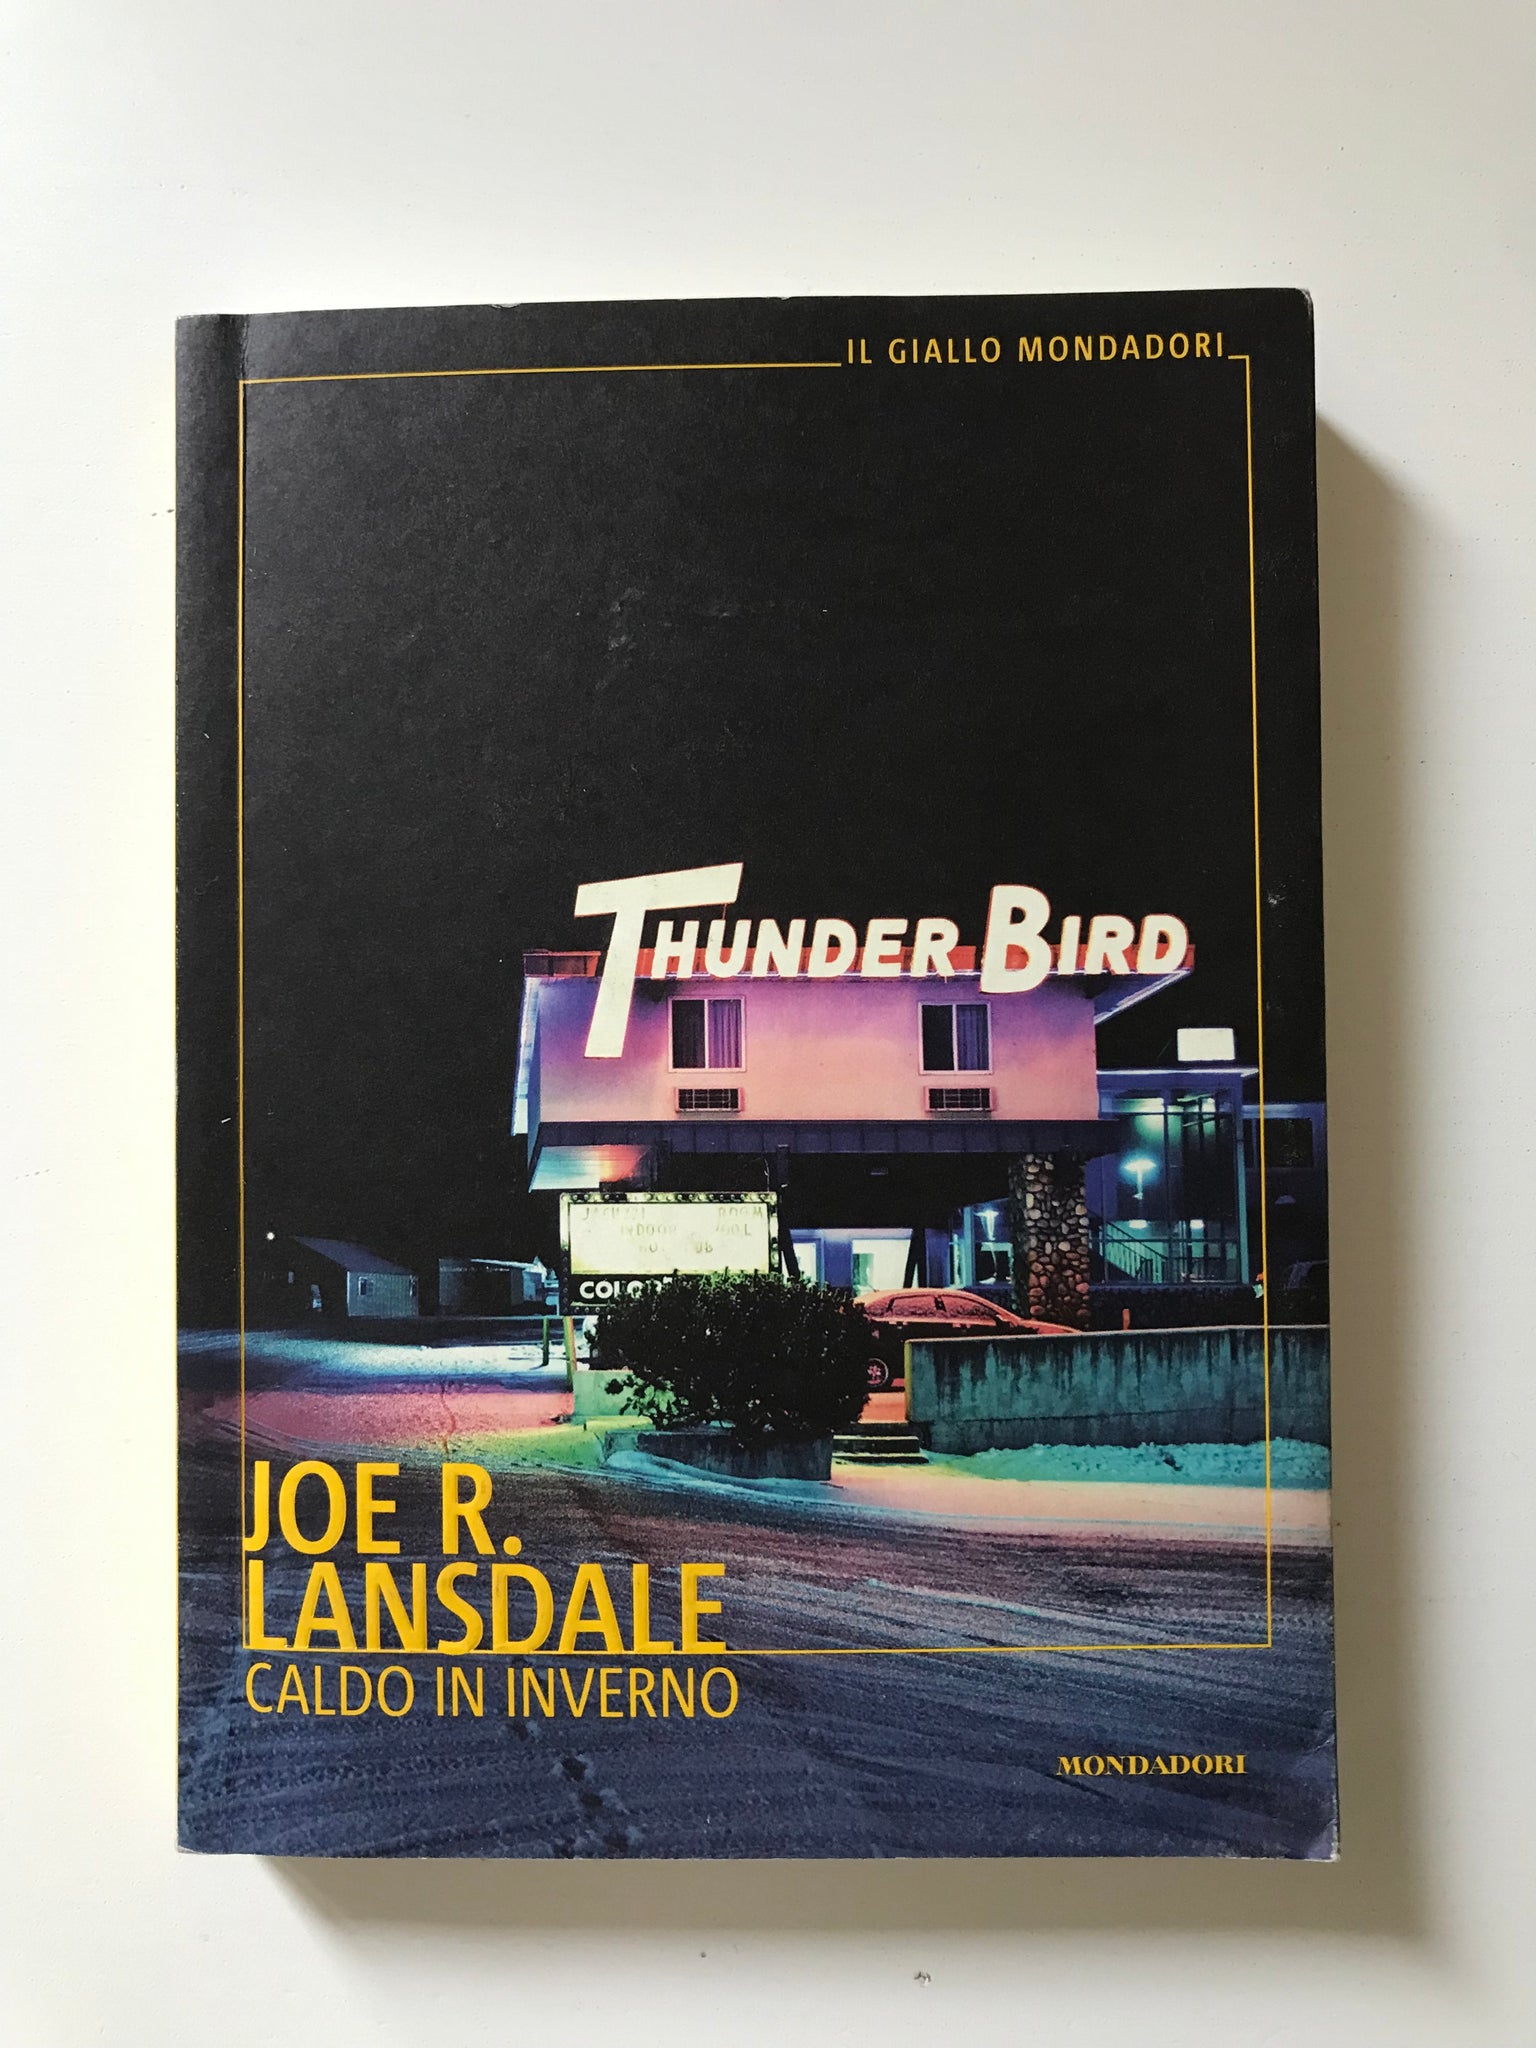 Joe R. Lansdale - Caldo in inverno